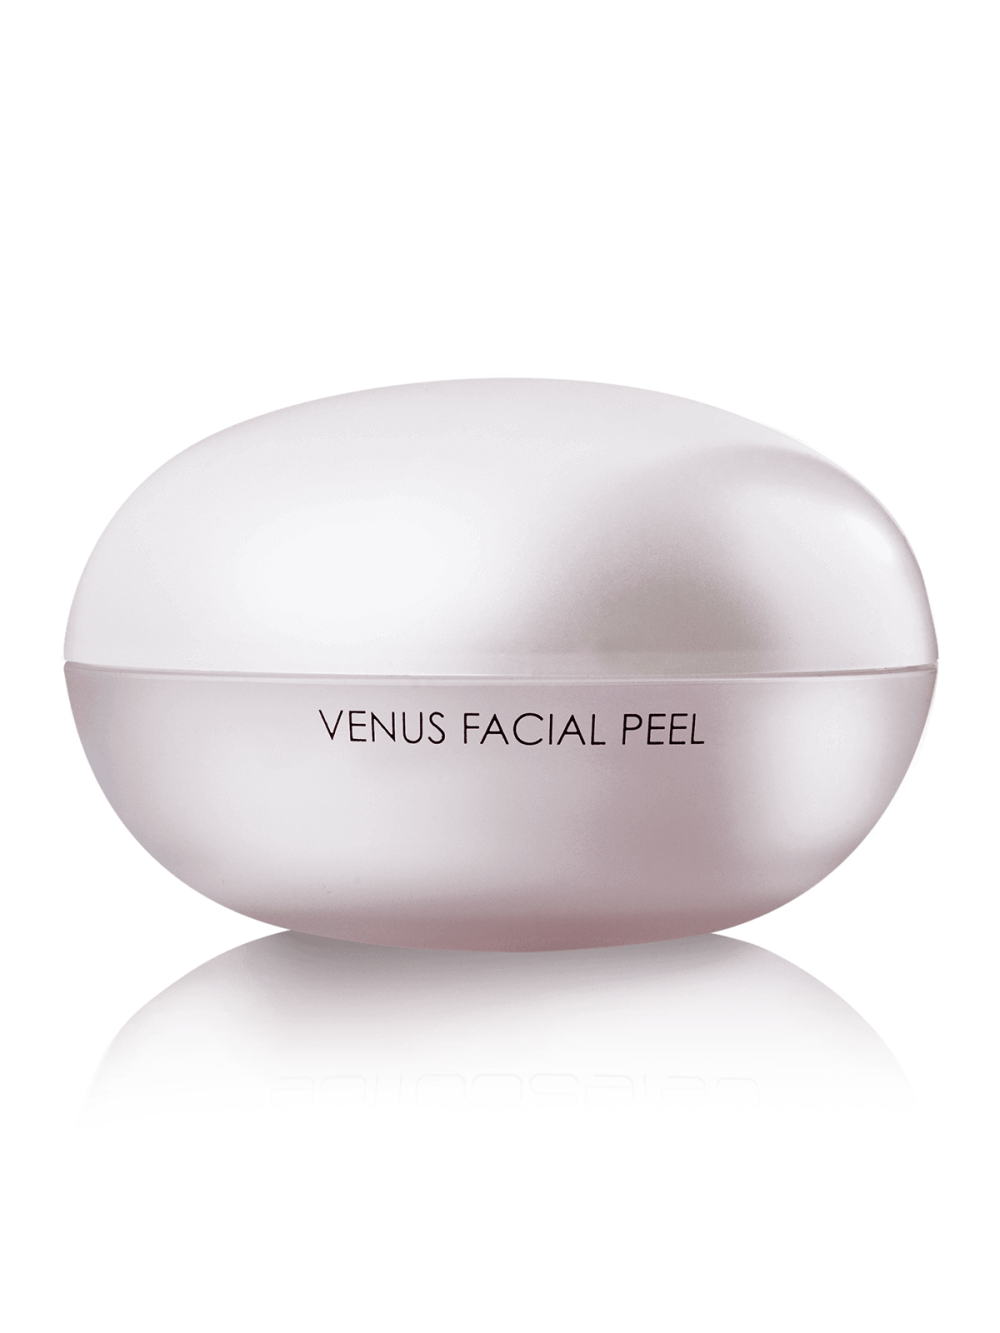 Venus Facial Peel back